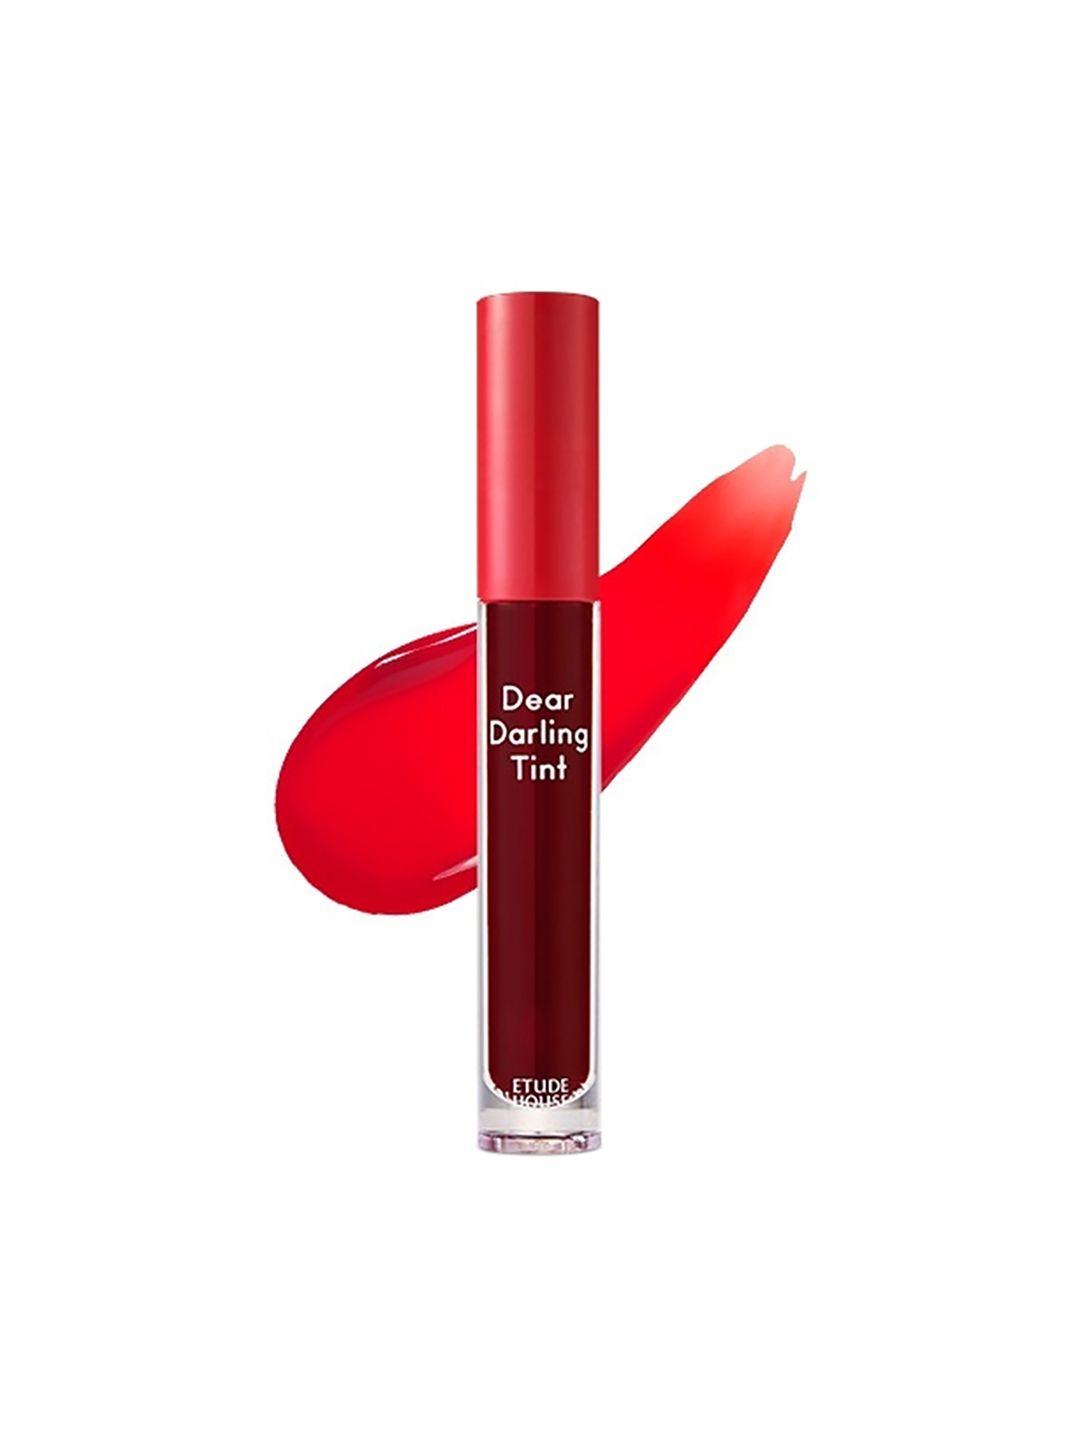 etude dear darling water gel tint long lasting matte finish lipstick 5 g - rd301